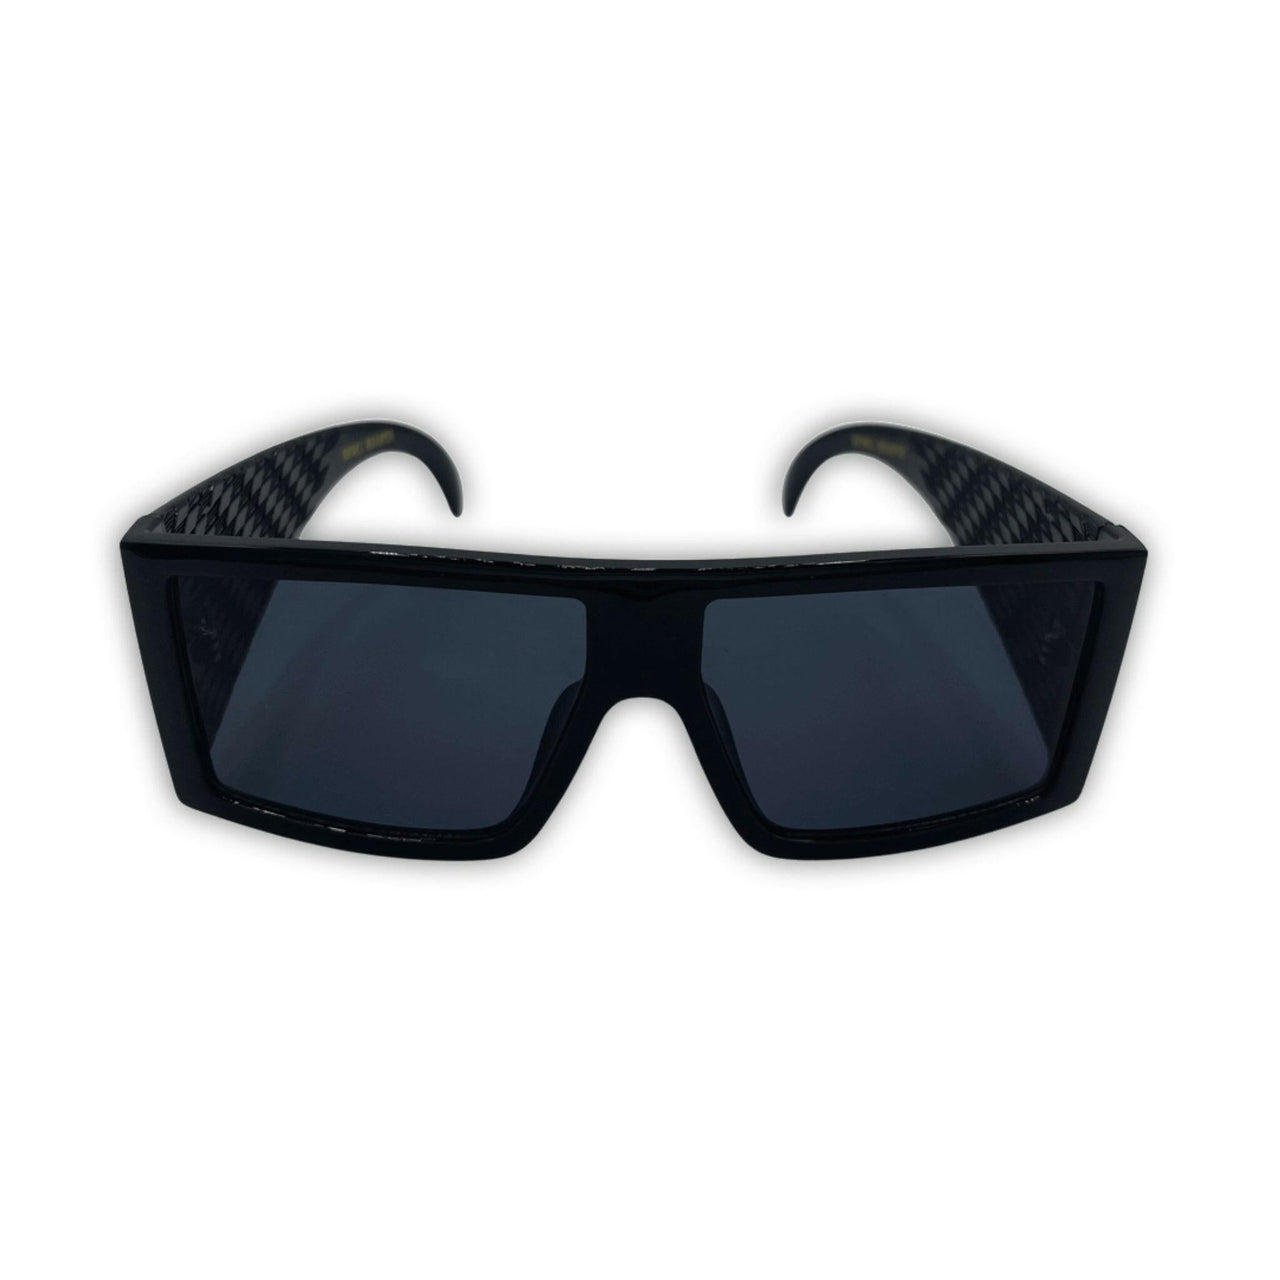 Dana Solid Black Sunglasses